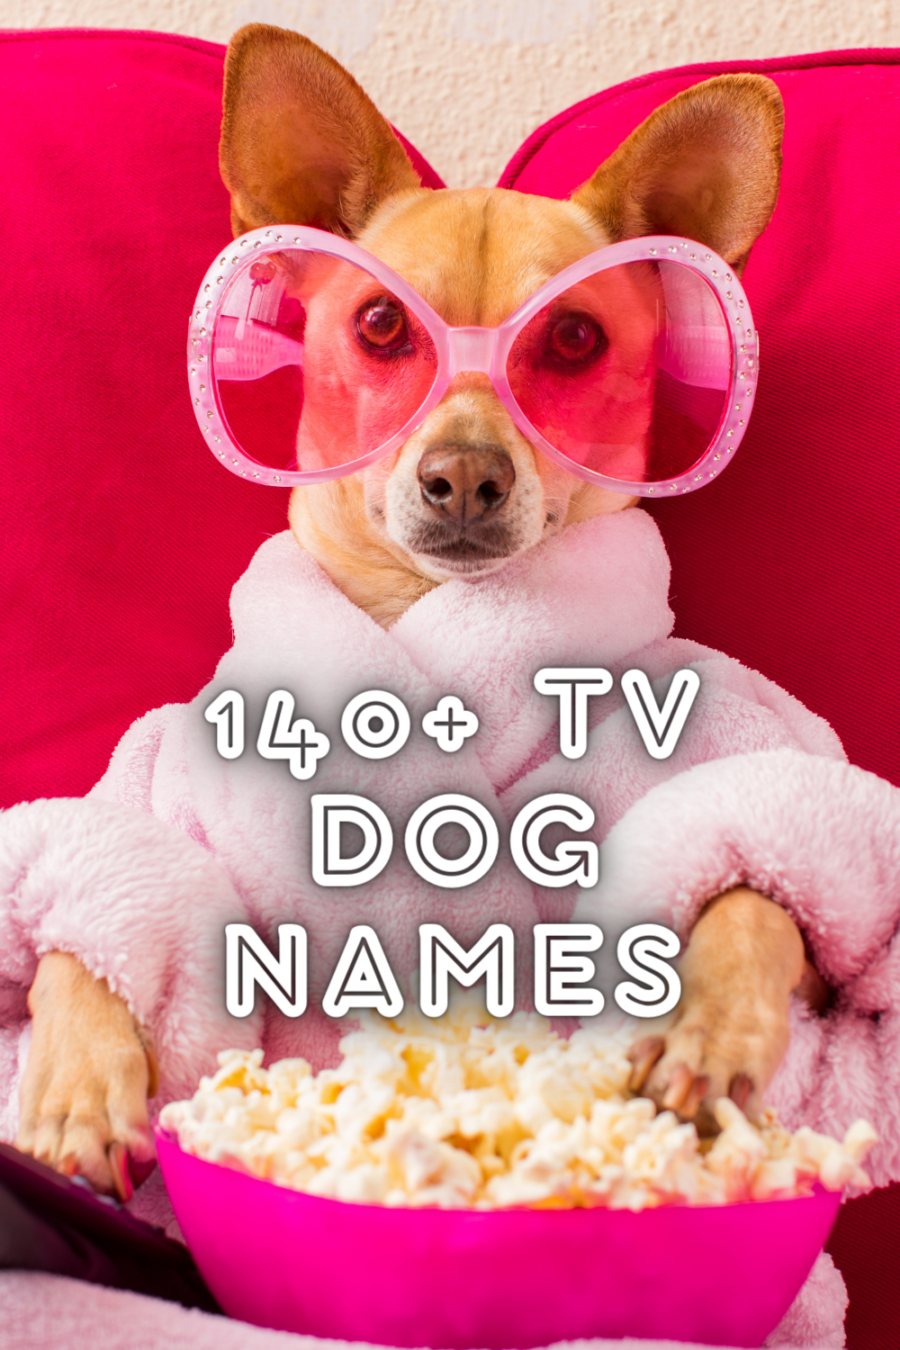 TV dog names